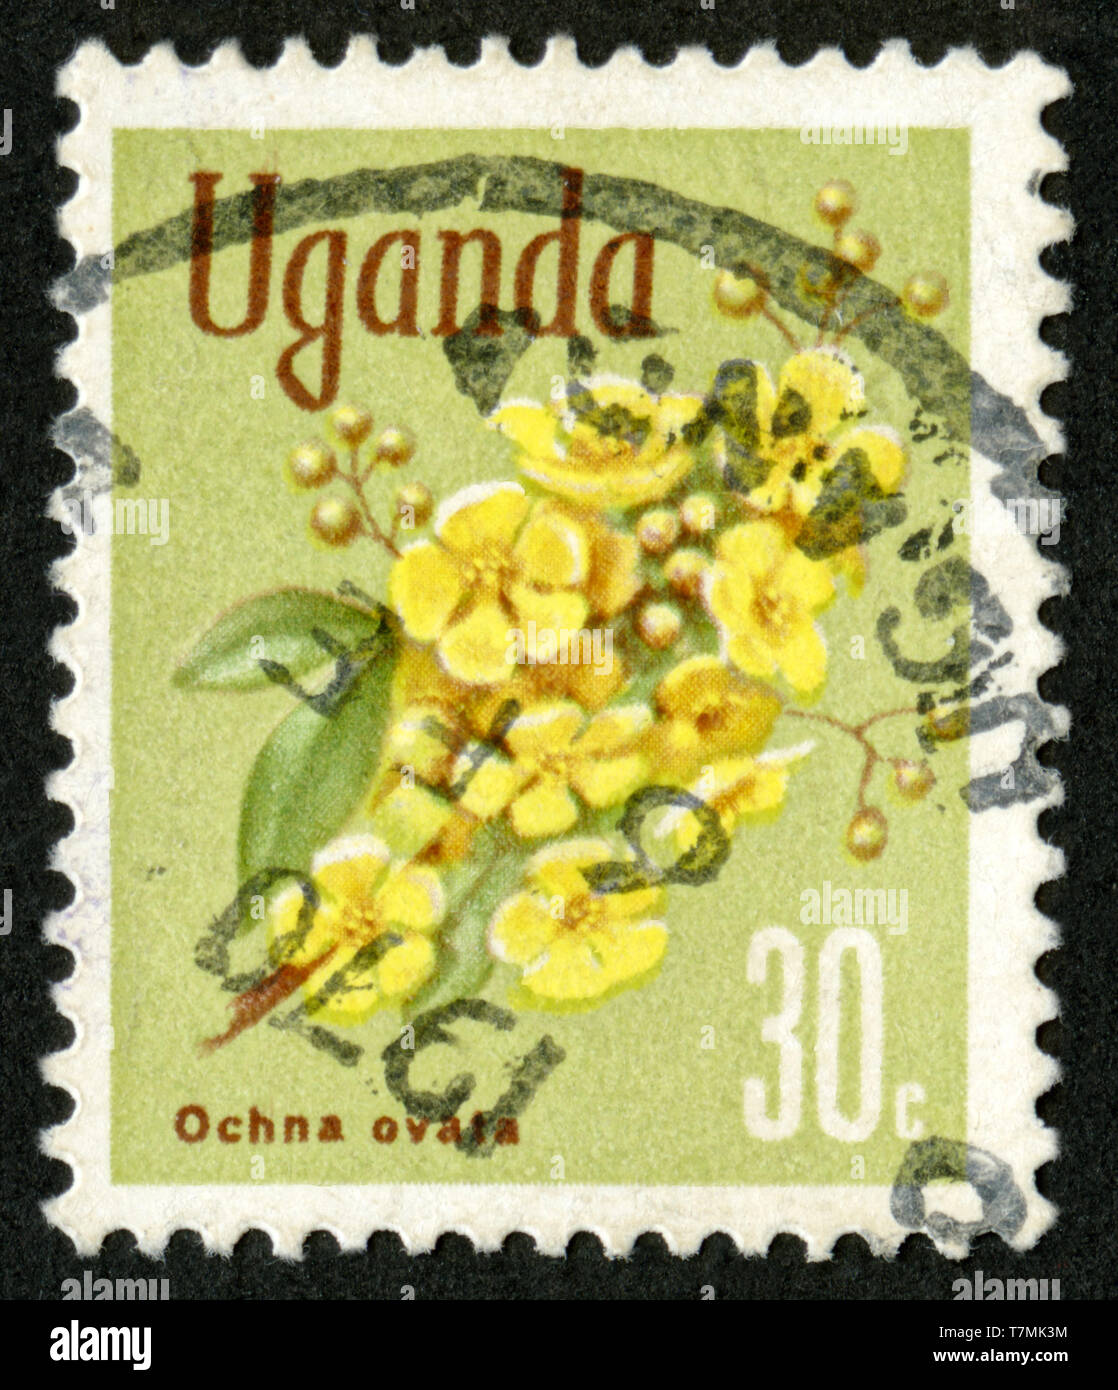 Stamp print in Uganda,flowers Stock Photo